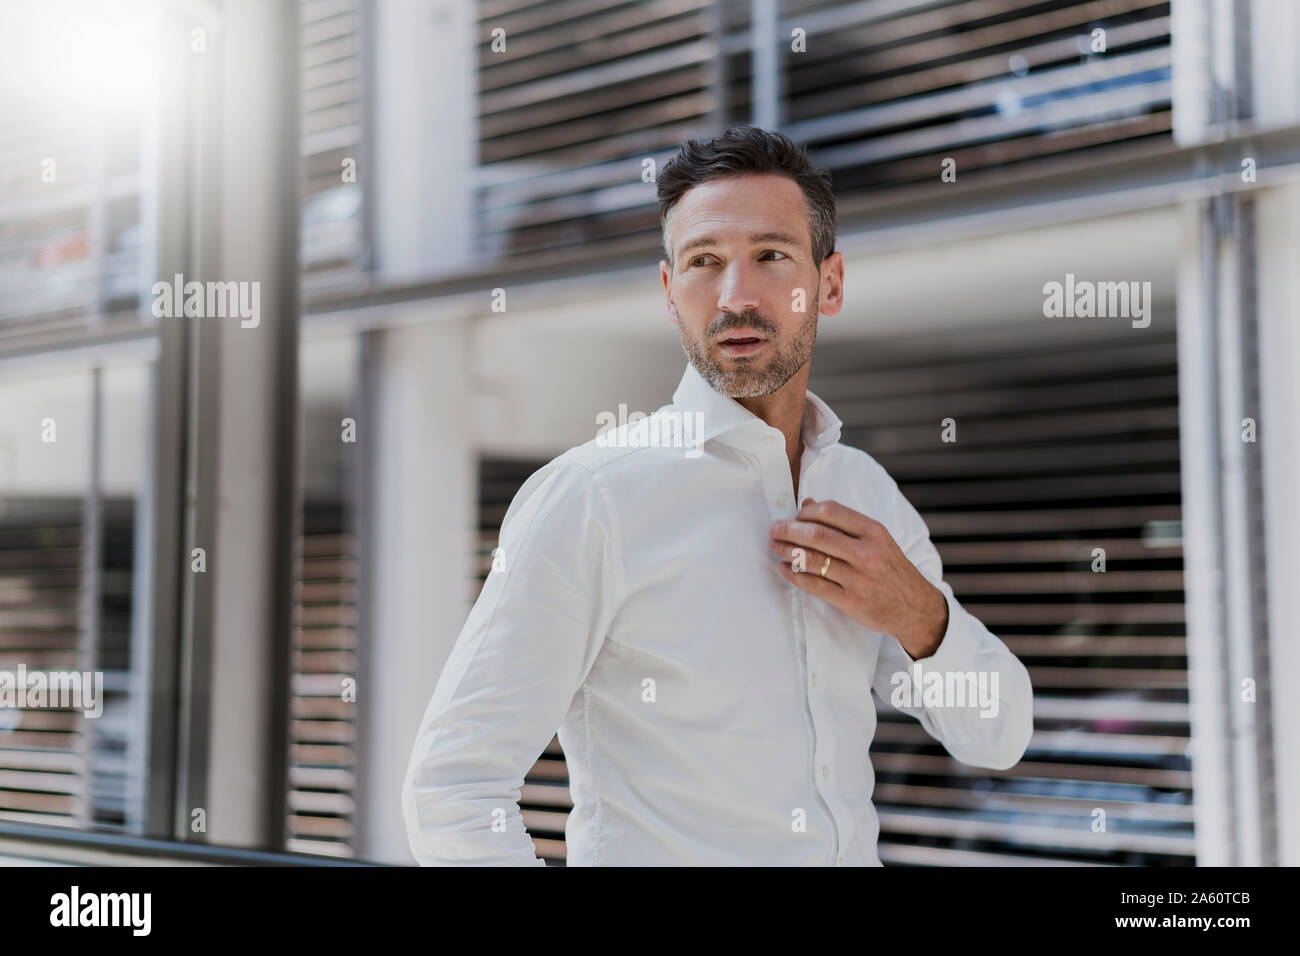 Businessman at a car park wearing white shirt Stock Photo